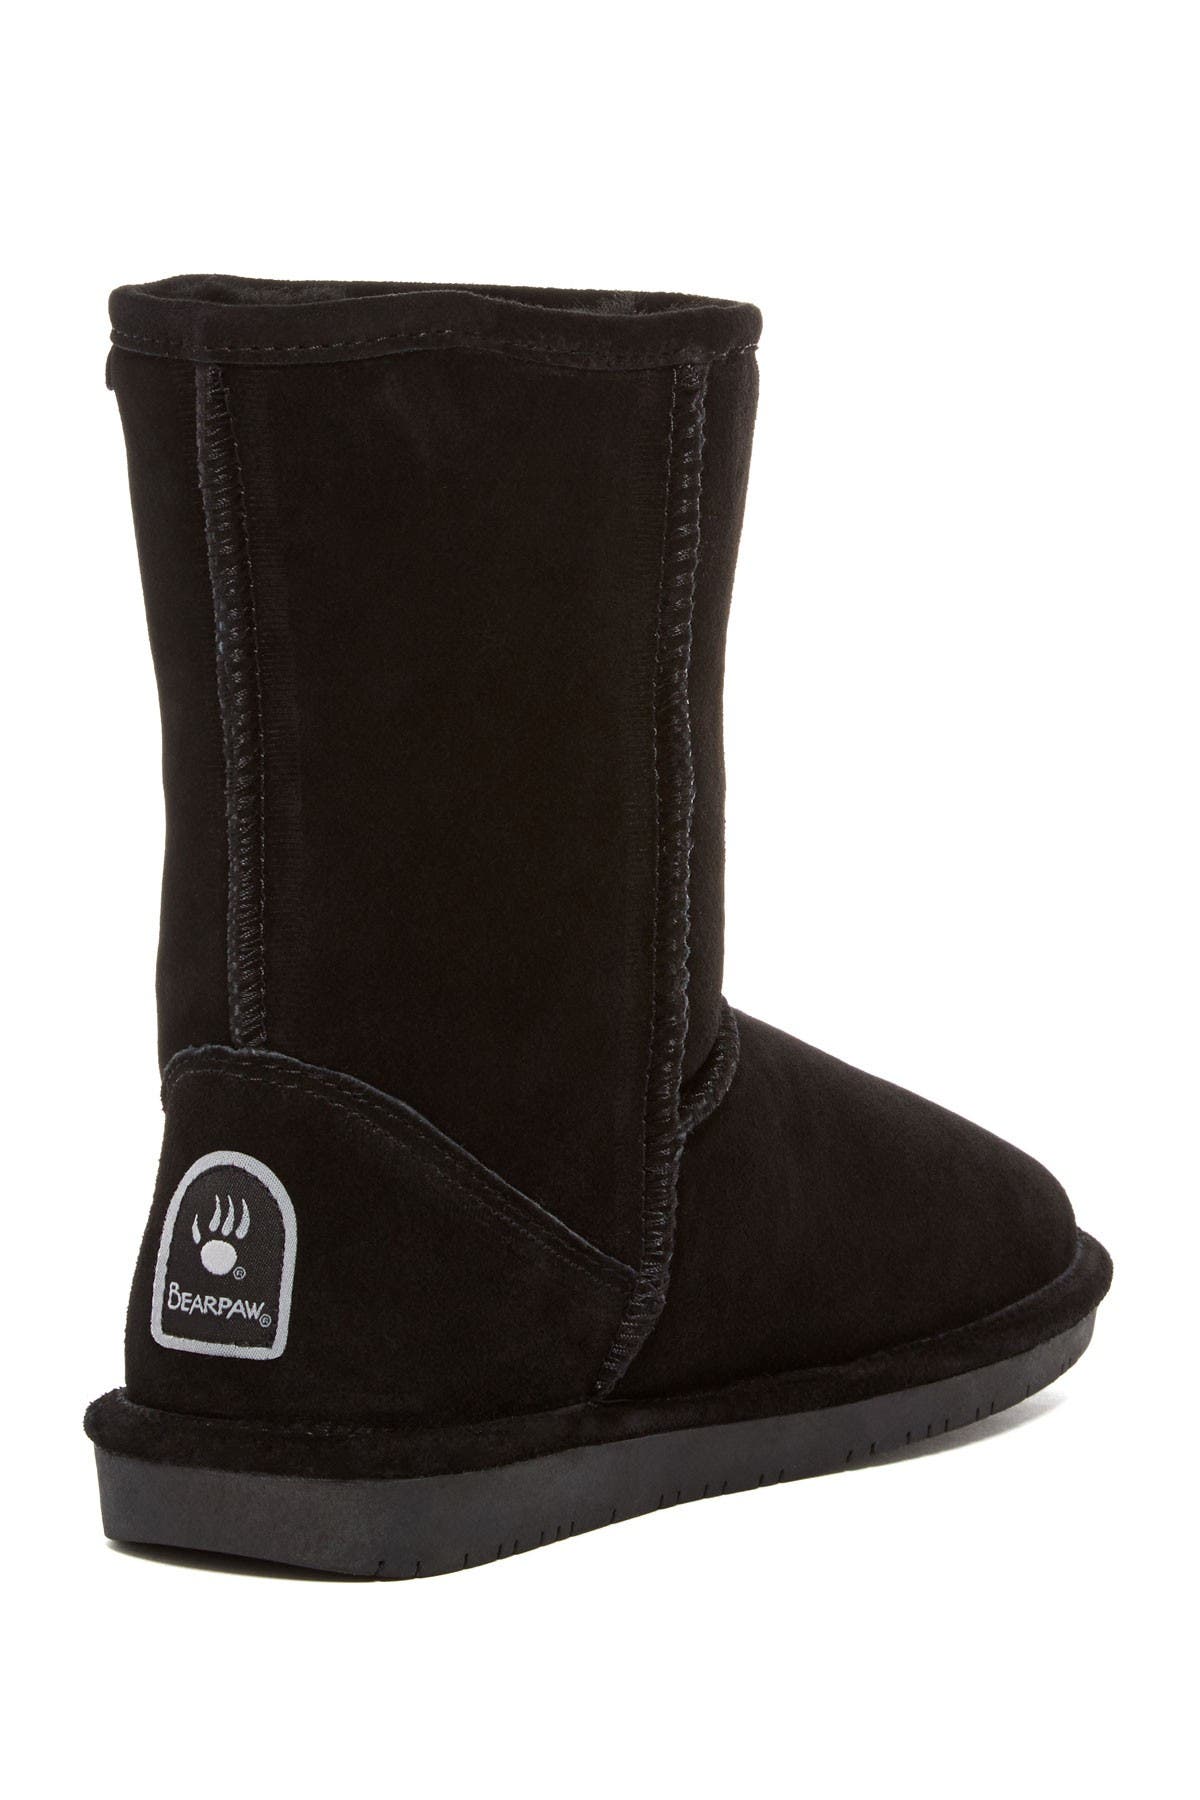 black emma bearpaw boots